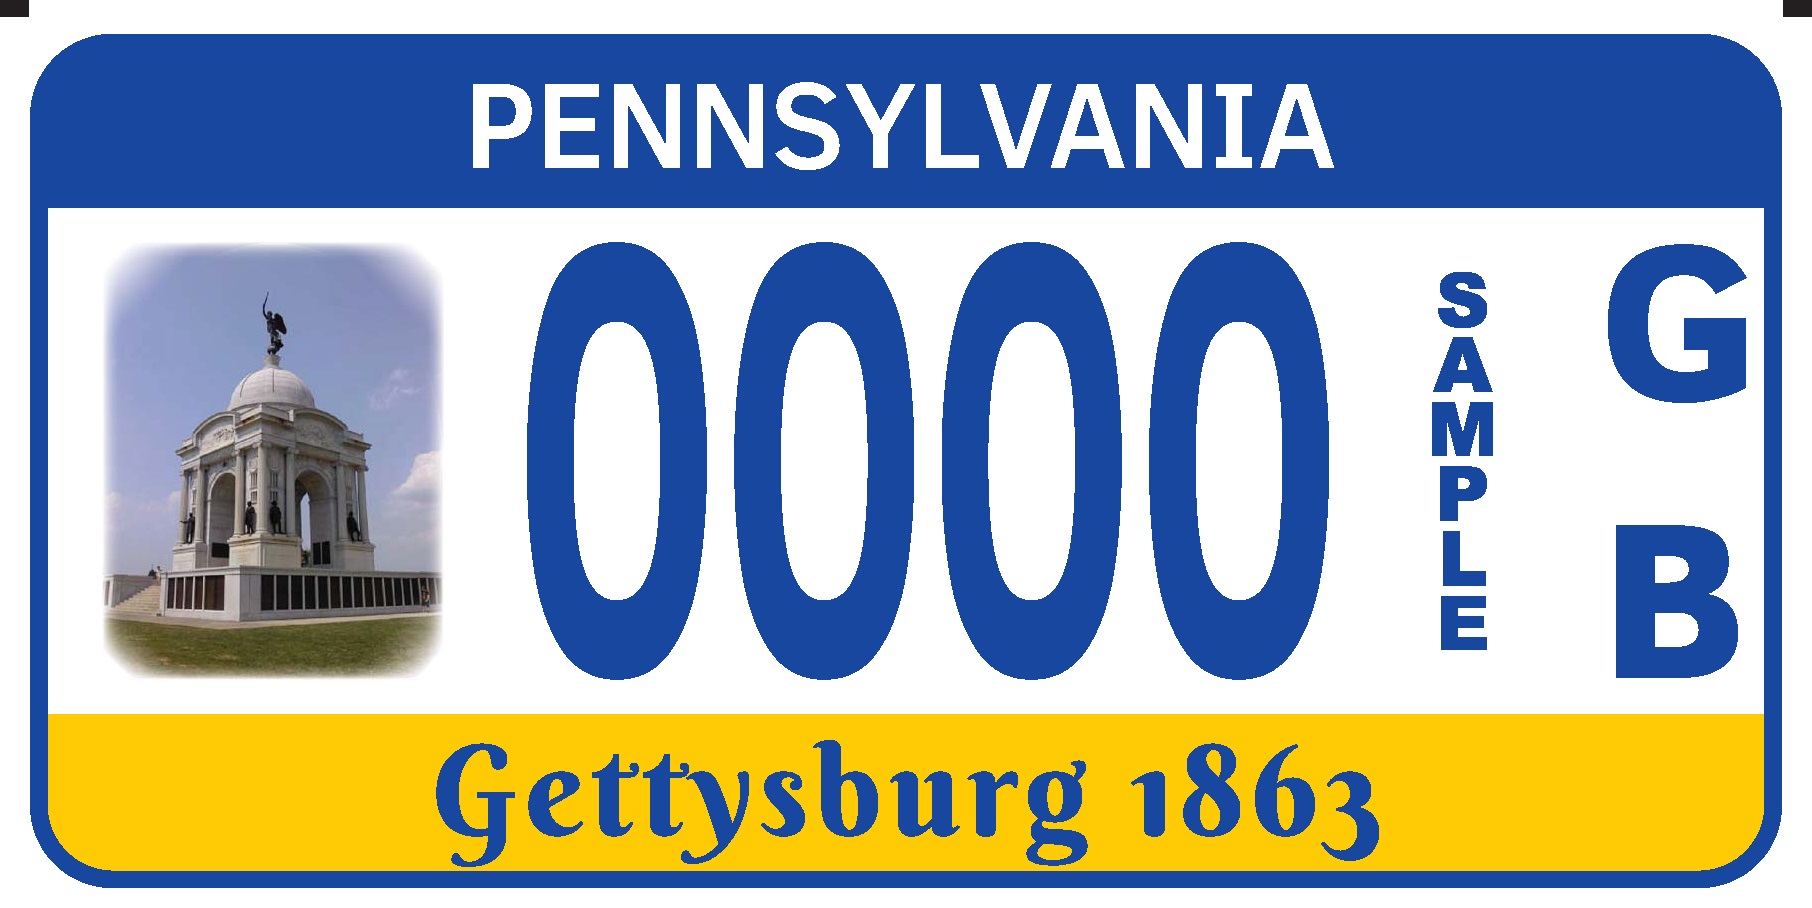 The Pennsylvania Monument License Plate